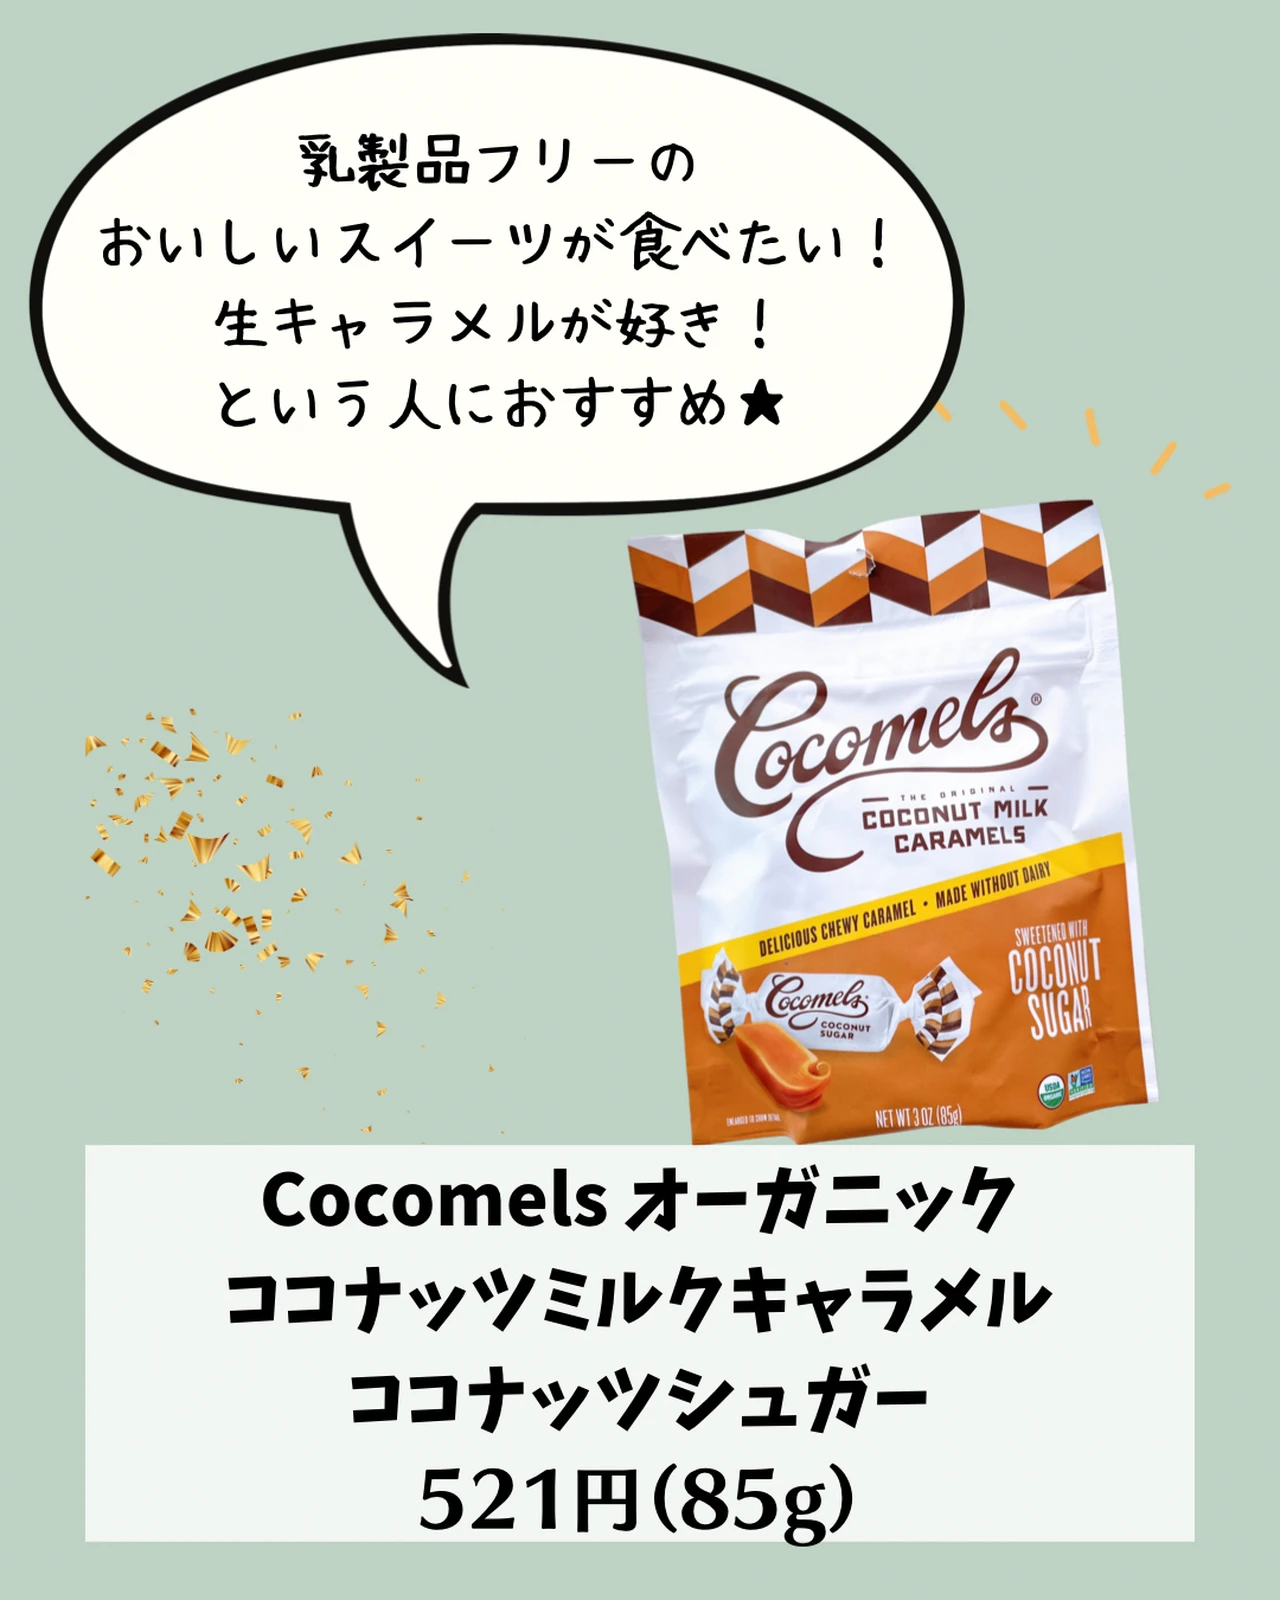 愛用 ＊caramel milk＊様*˙︶˙*)ノ